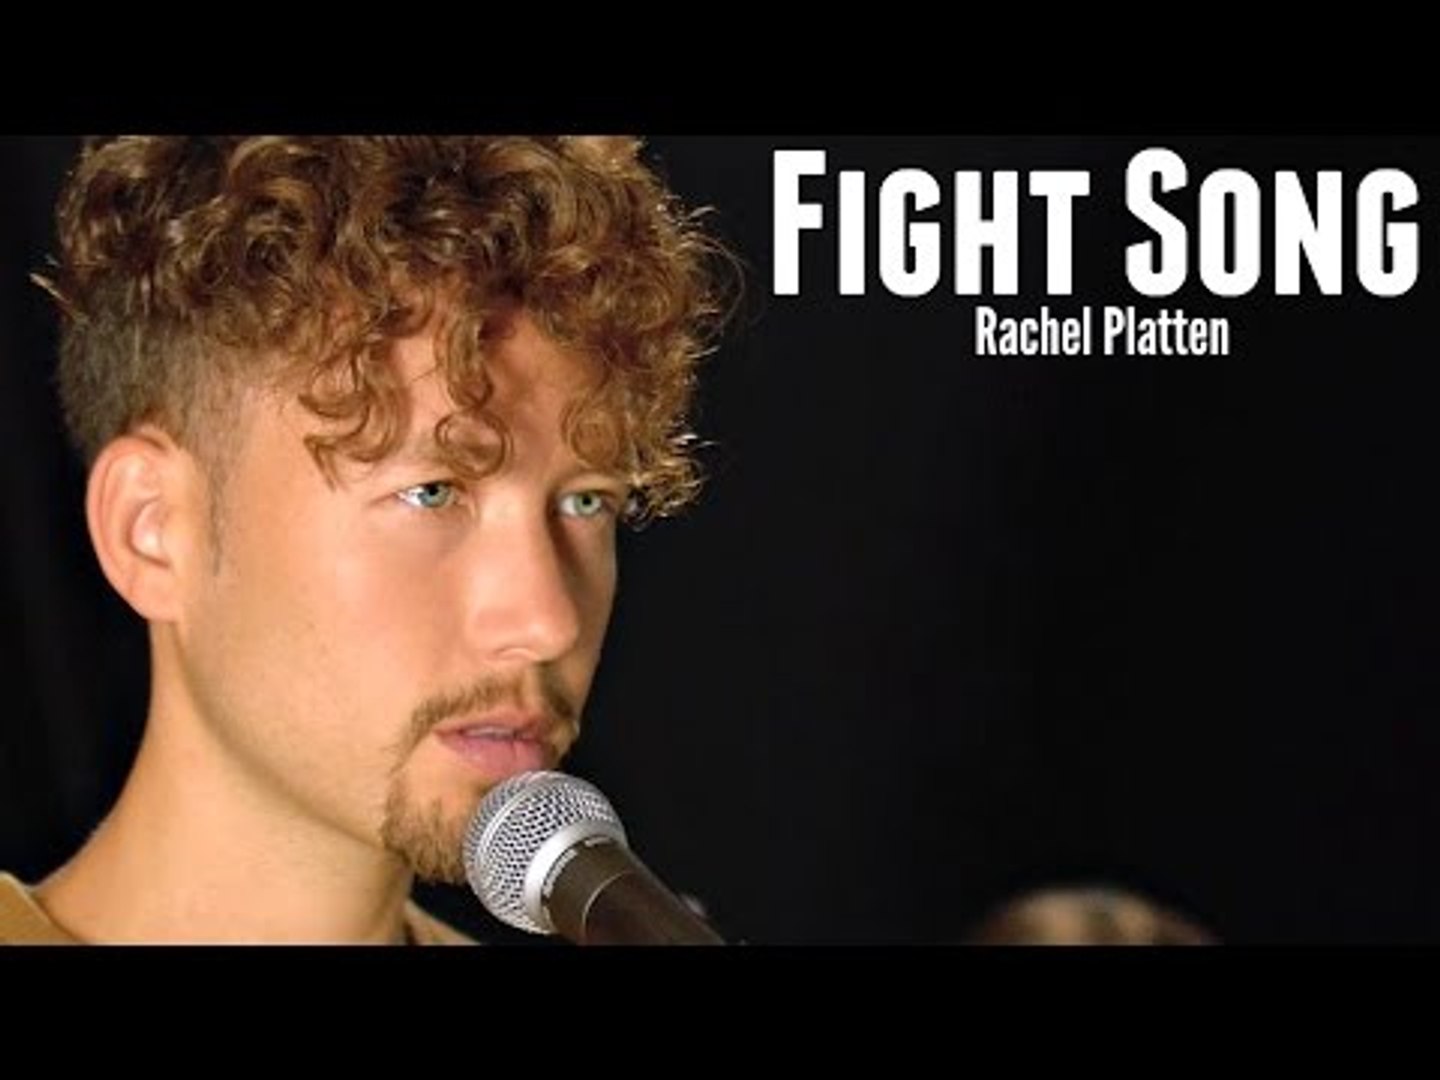 FIGHT SONG Lyrics- Rachel Platten